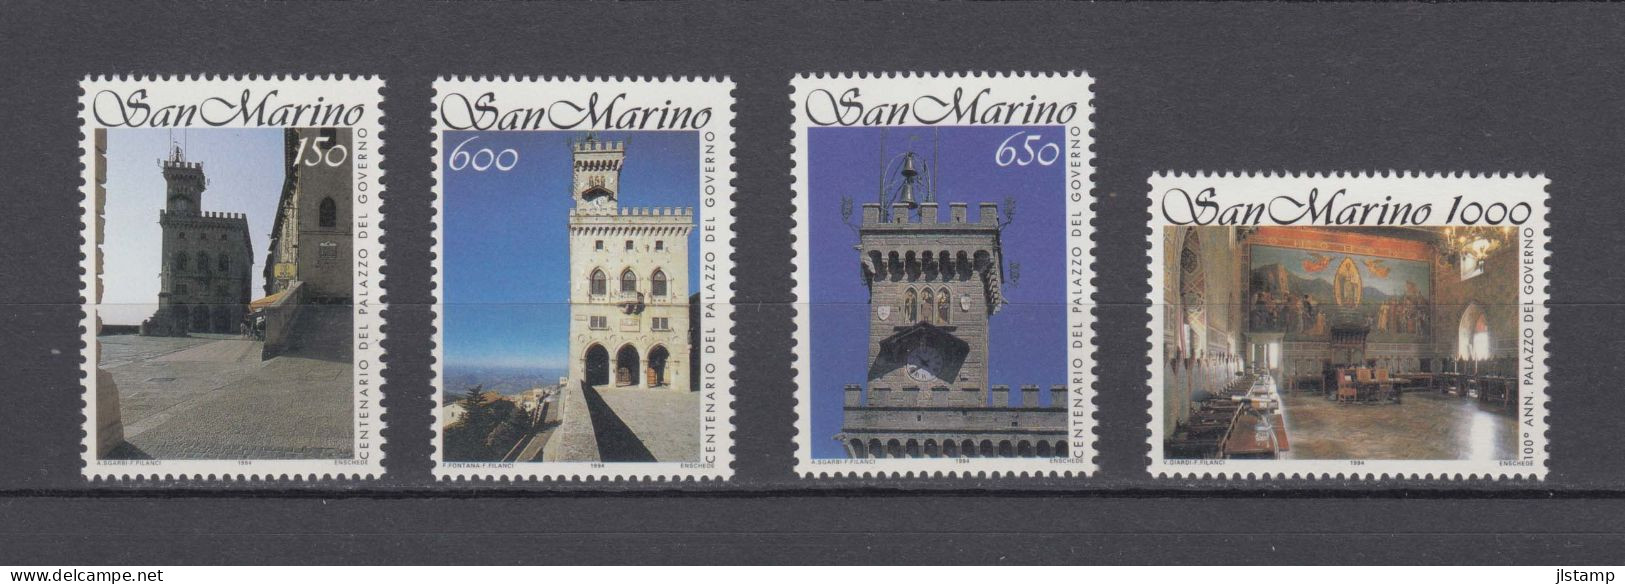 San Marino 1994 Government Building ,Scott#1286-1289,MNH,OG,VF - Unused Stamps